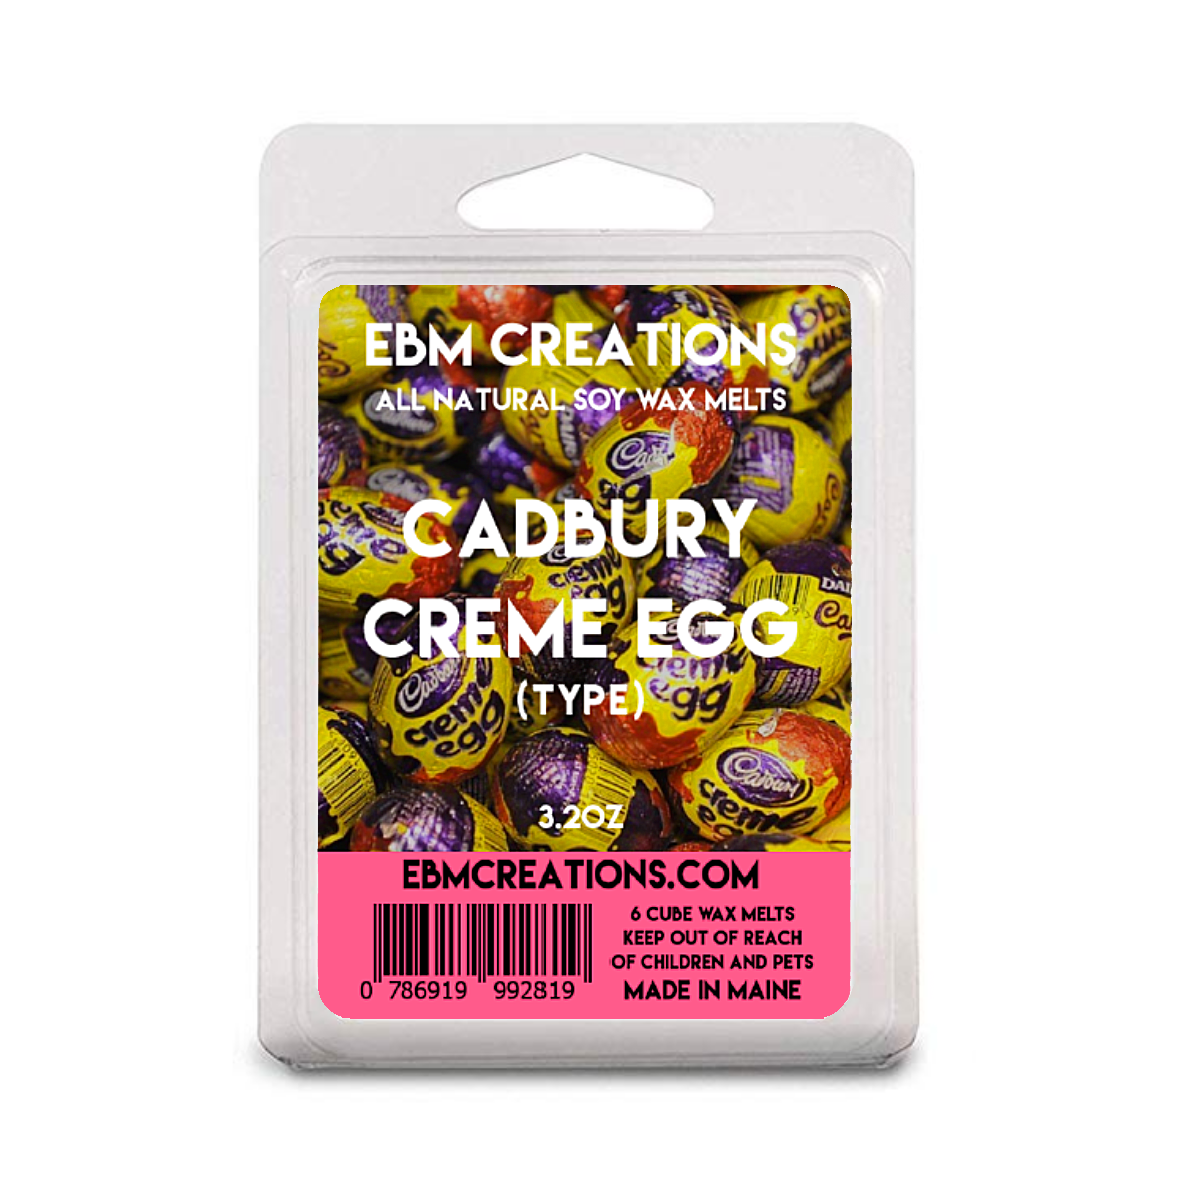 Cadbury Creme Egg - 3.2 oz Clamshell